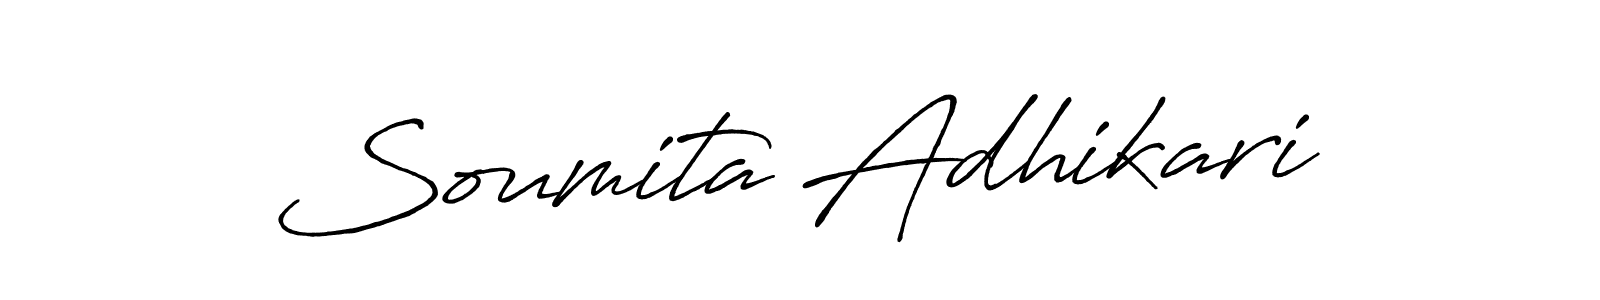 Make a beautiful signature design for name Soumita Adhikari. Use this online signature maker to create a handwritten signature for free. Soumita Adhikari signature style 7 images and pictures png